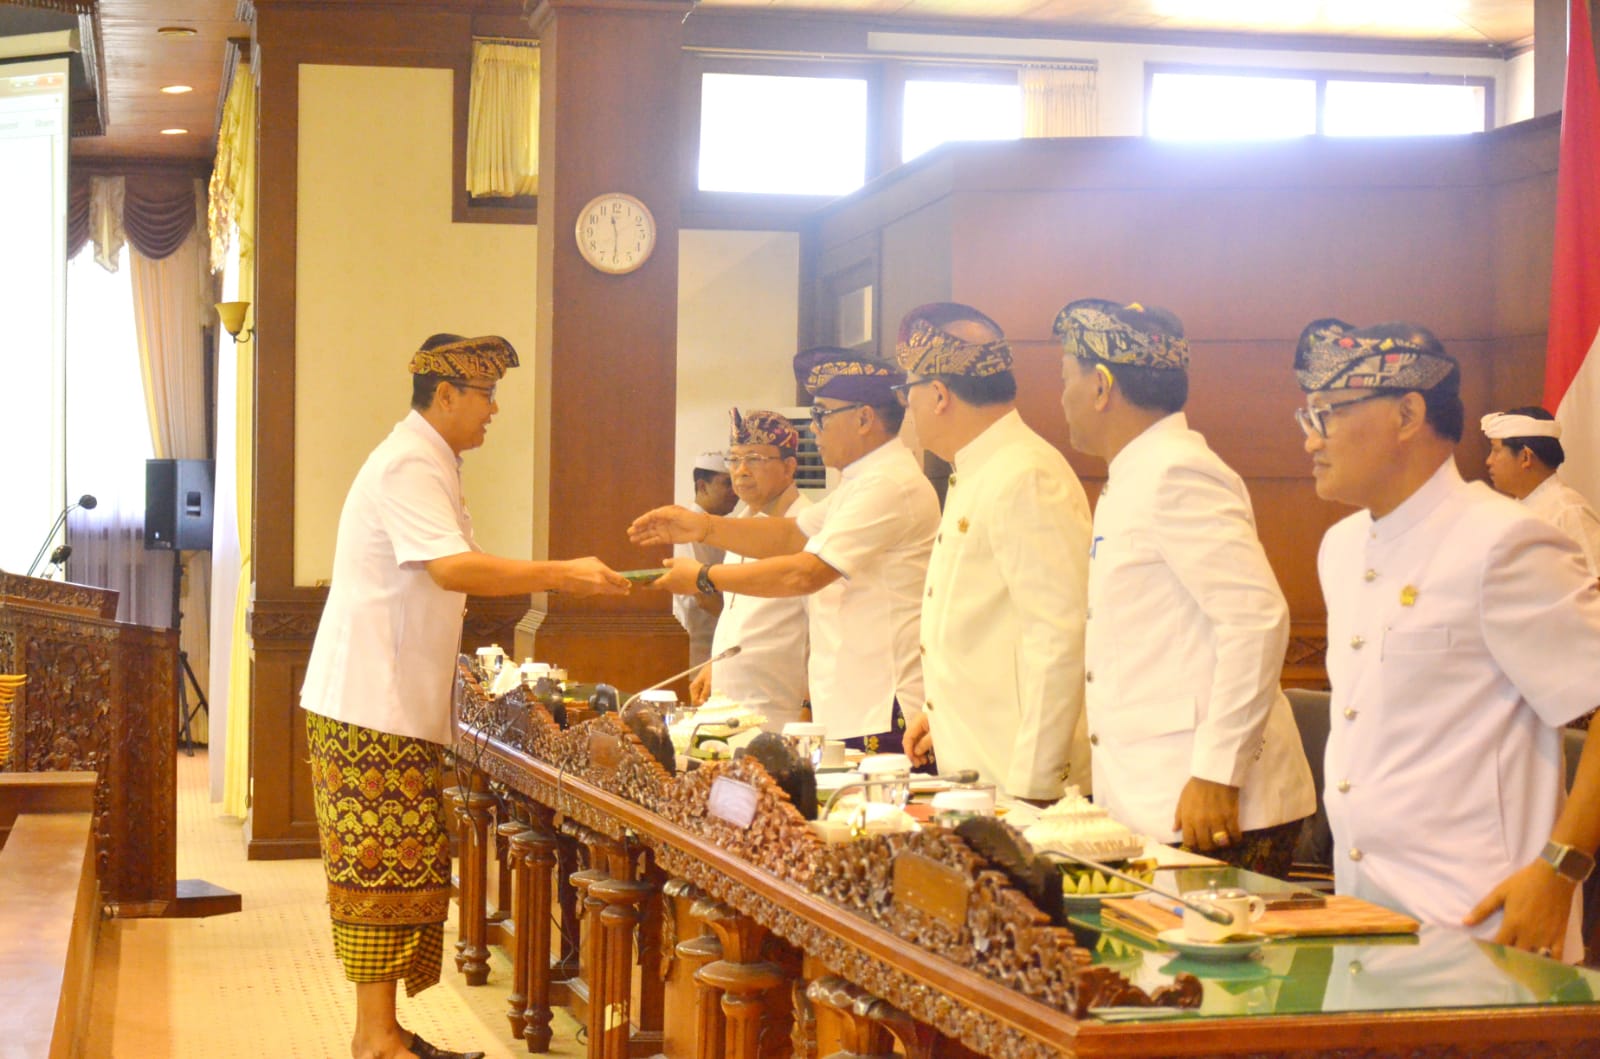 Juru Bicara Fraksi Partai Golkar DPRD Bali, I Made Suardana menyerahkan dokumen pandangan umum Fraksi Golkar DPRD Bali yang diterima ketua DPRD Bali, Adi Wiryatama.